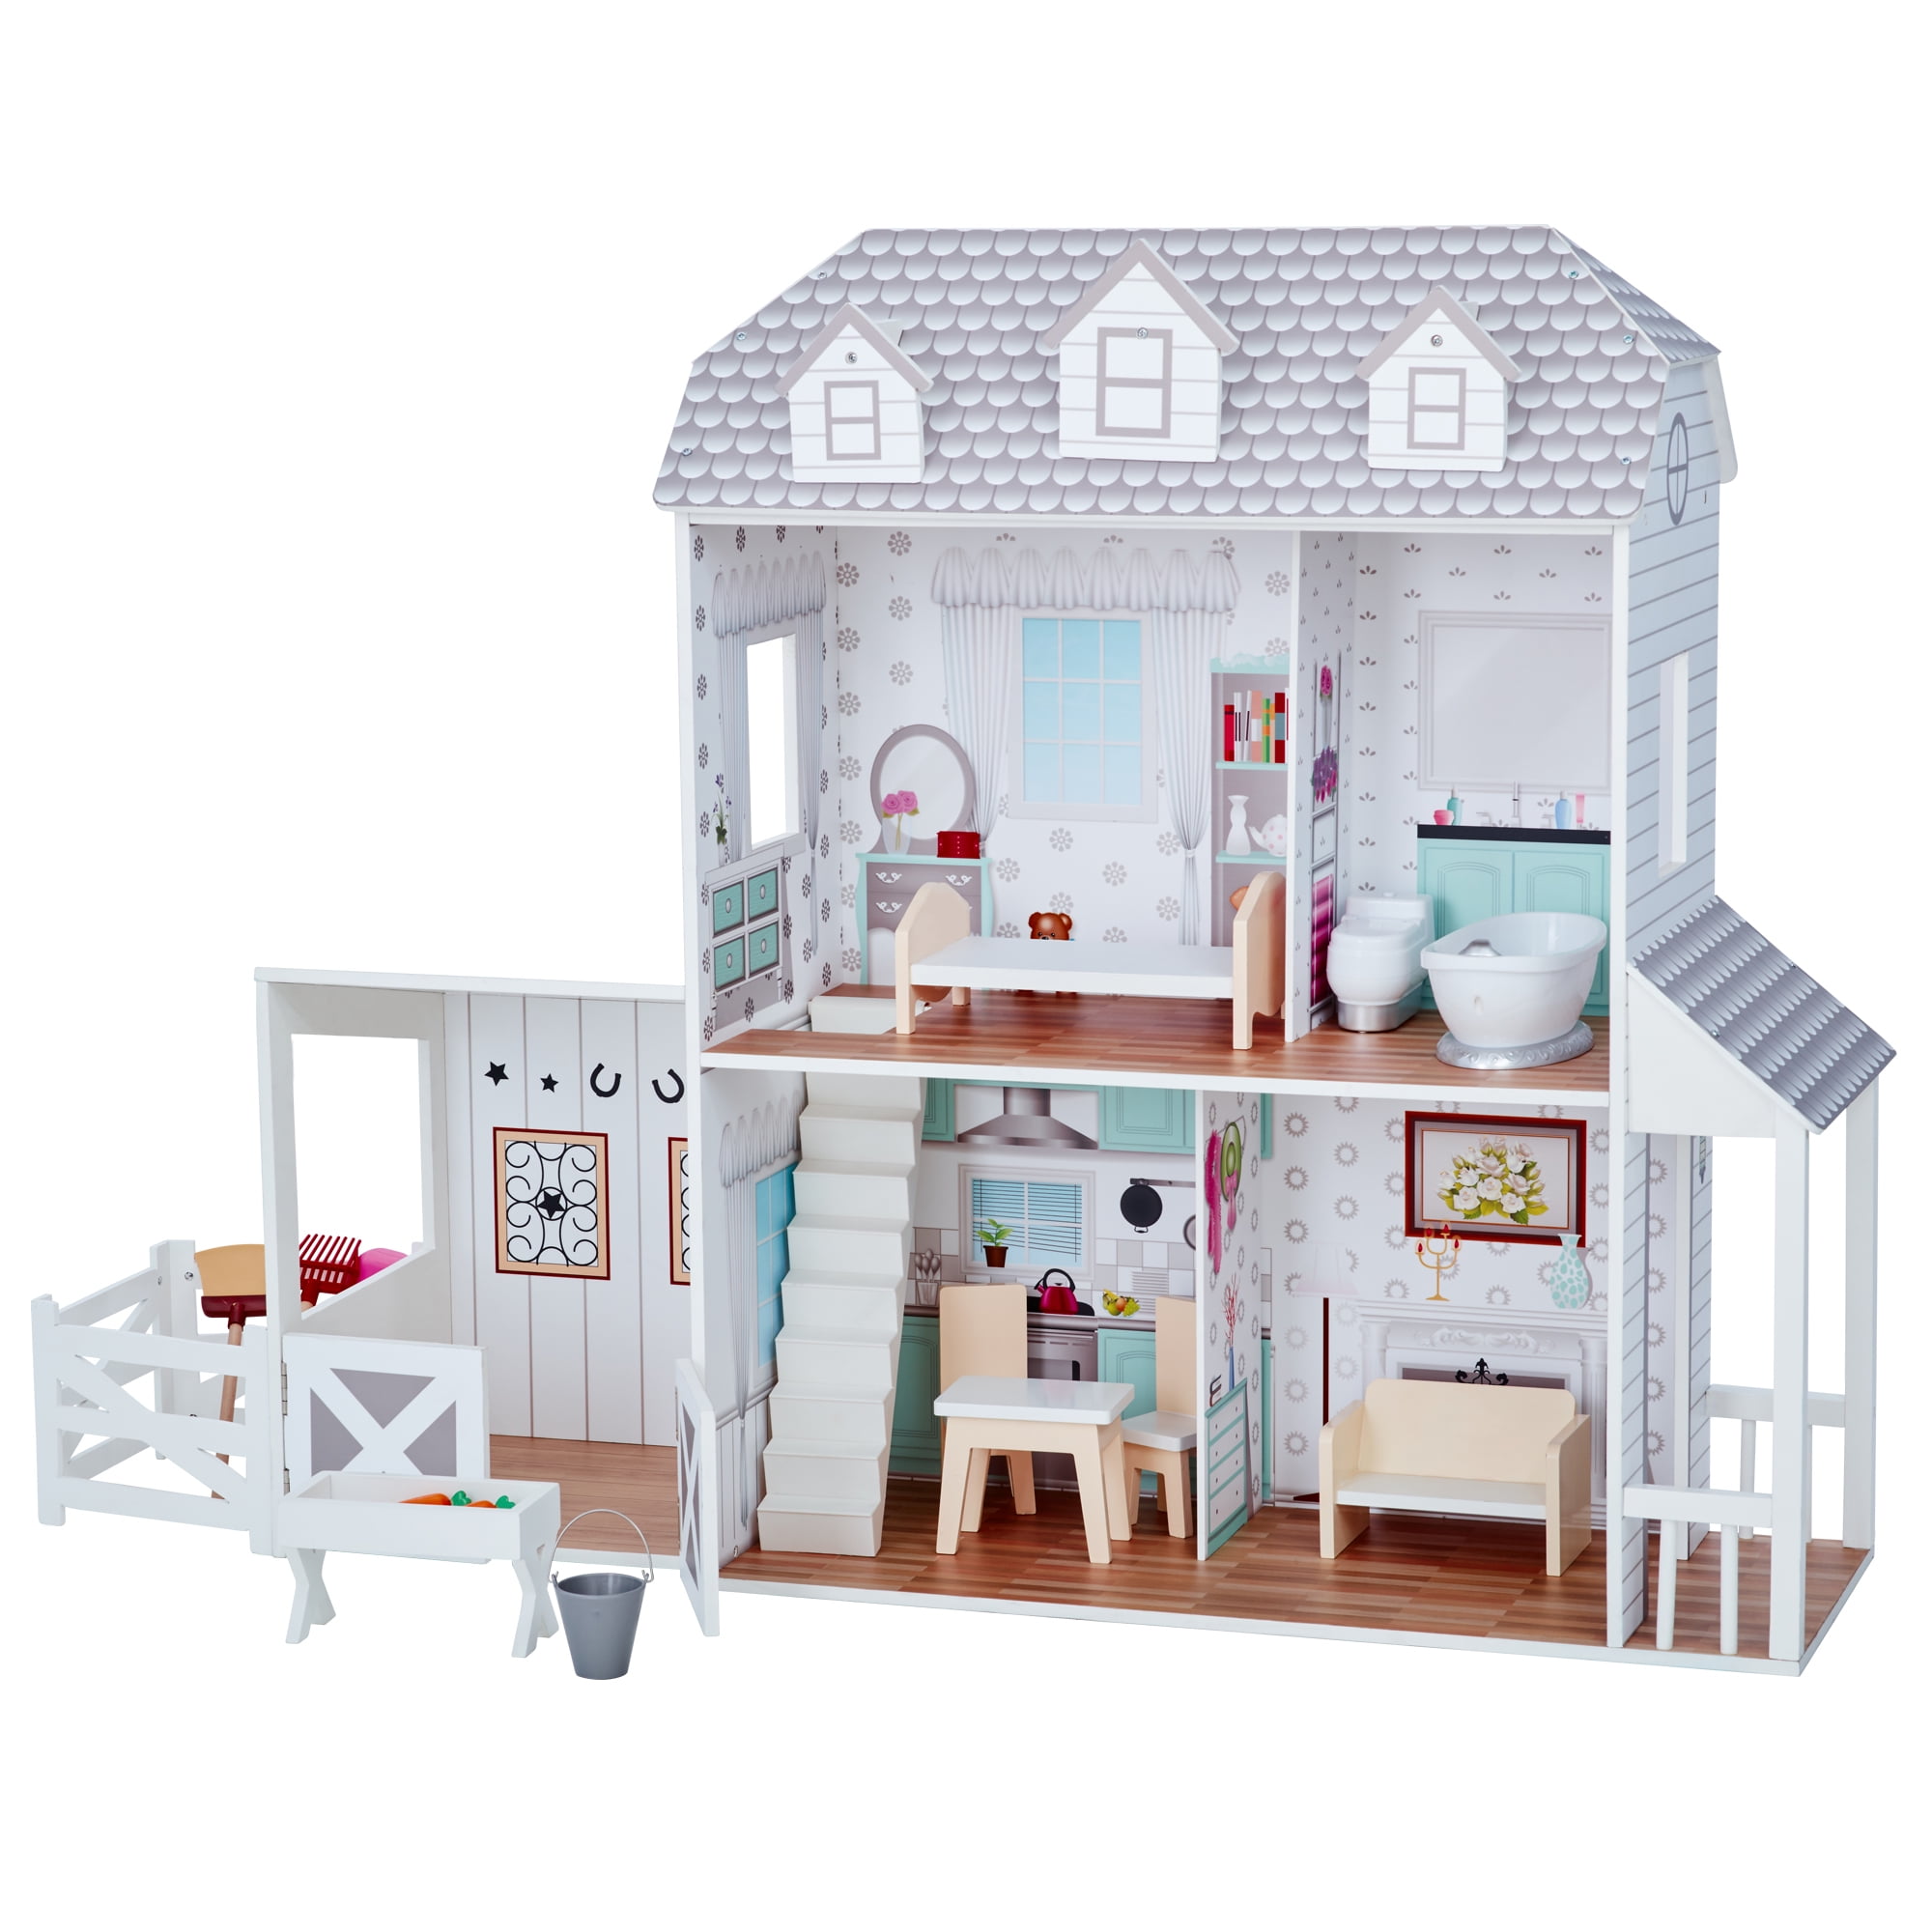 Fridja Modern Kitchen Mini Playset Pink Kitchen Toys Pretend Play House  Appliance Set & Accessories with Lights & Sound Gift for Girls 